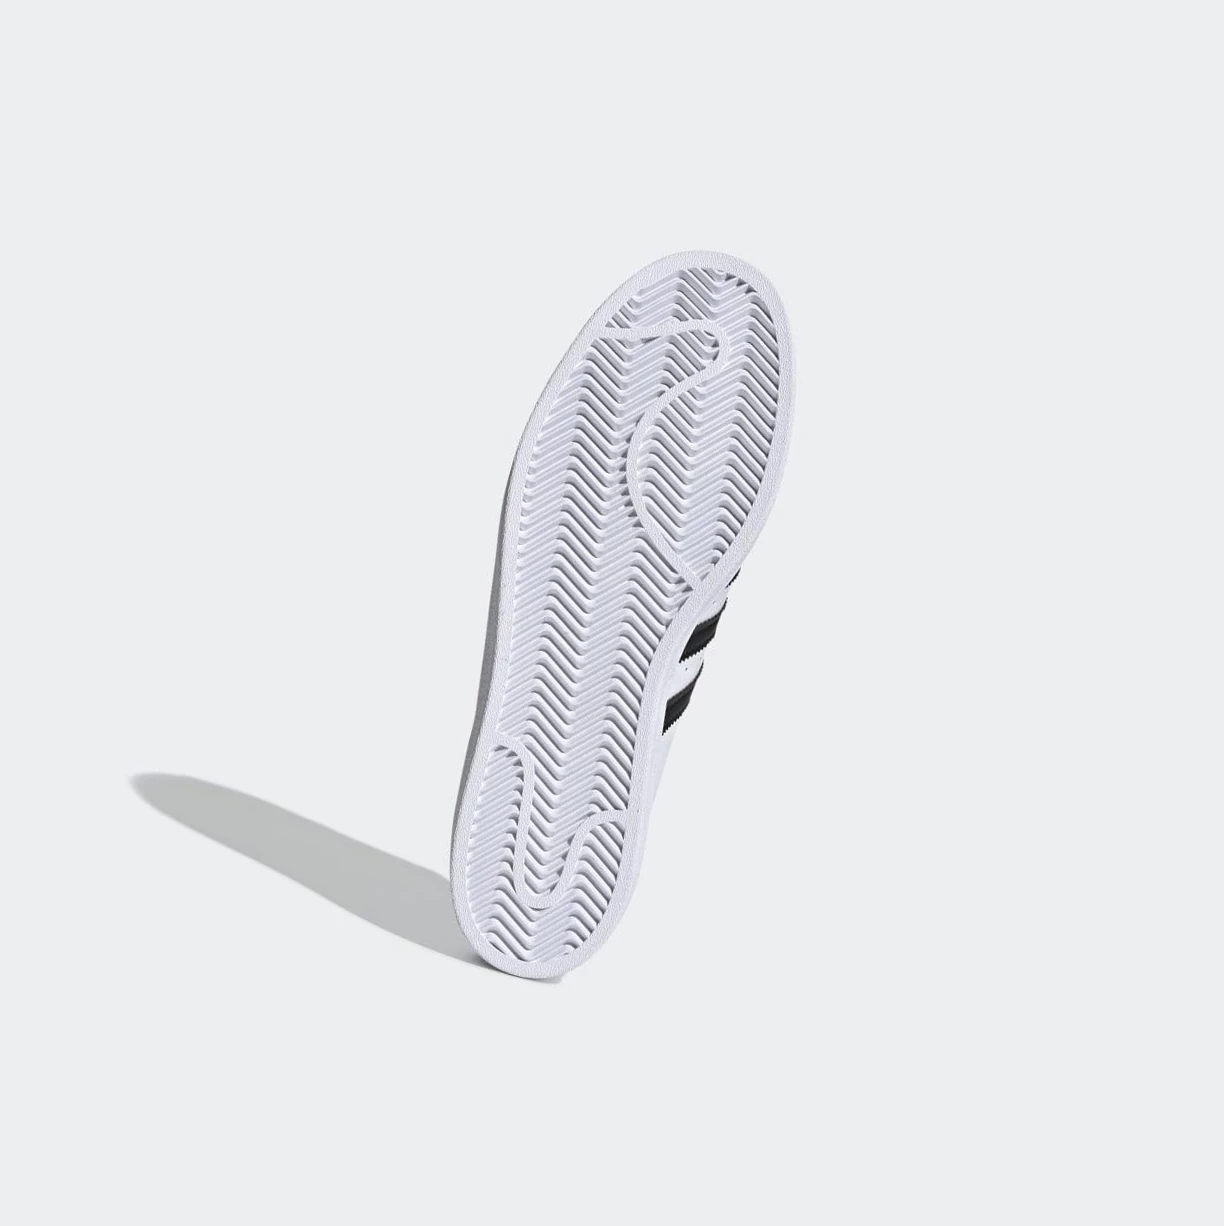 Slip on Adidas Superstar Panske Biele | 130SKBRPELN